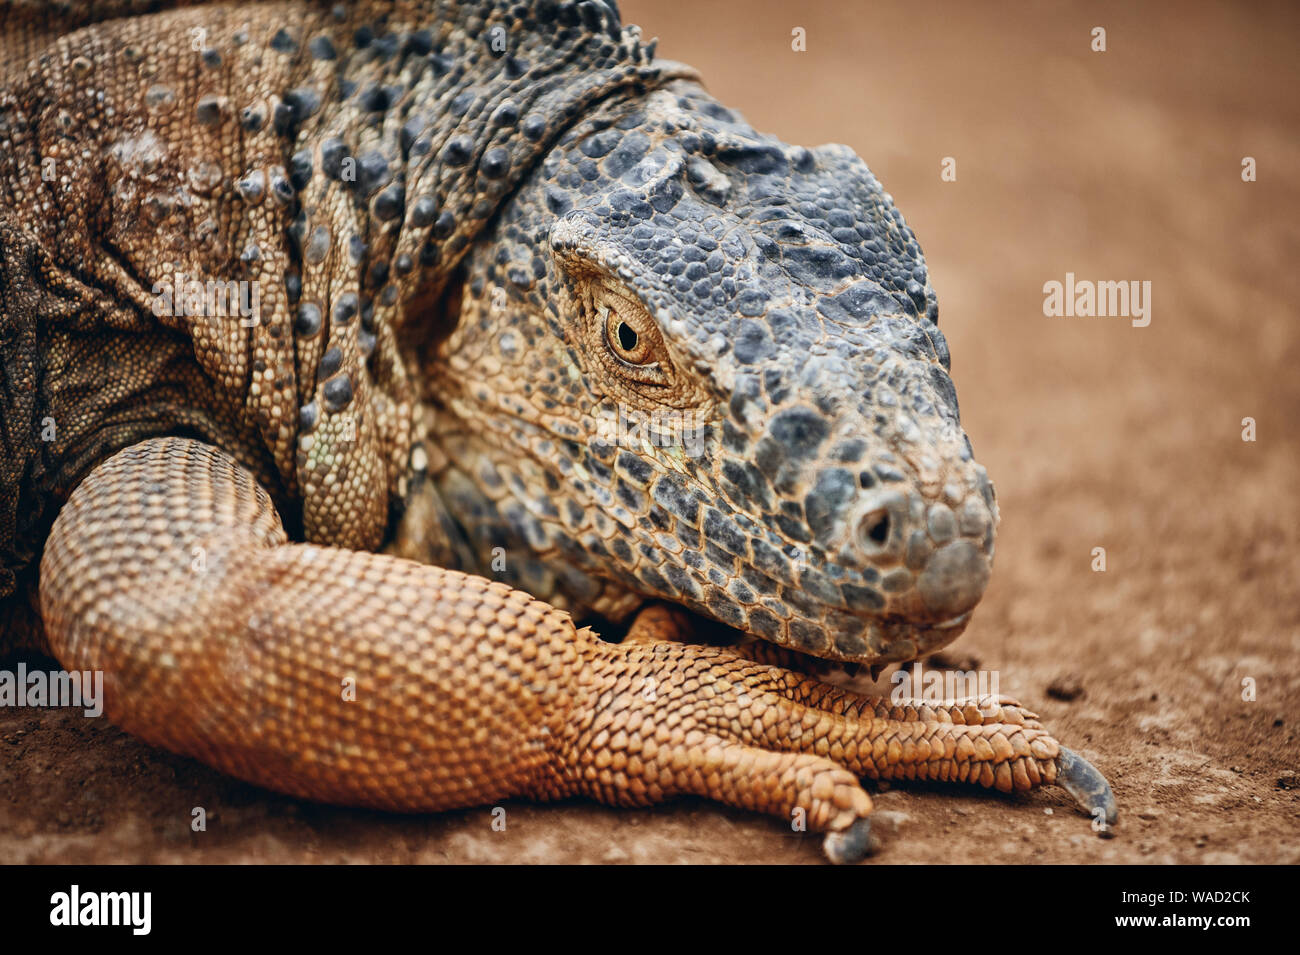 Huge iguana with scaly skin lying on sandy ground in Tenerife zoo Stock Photo